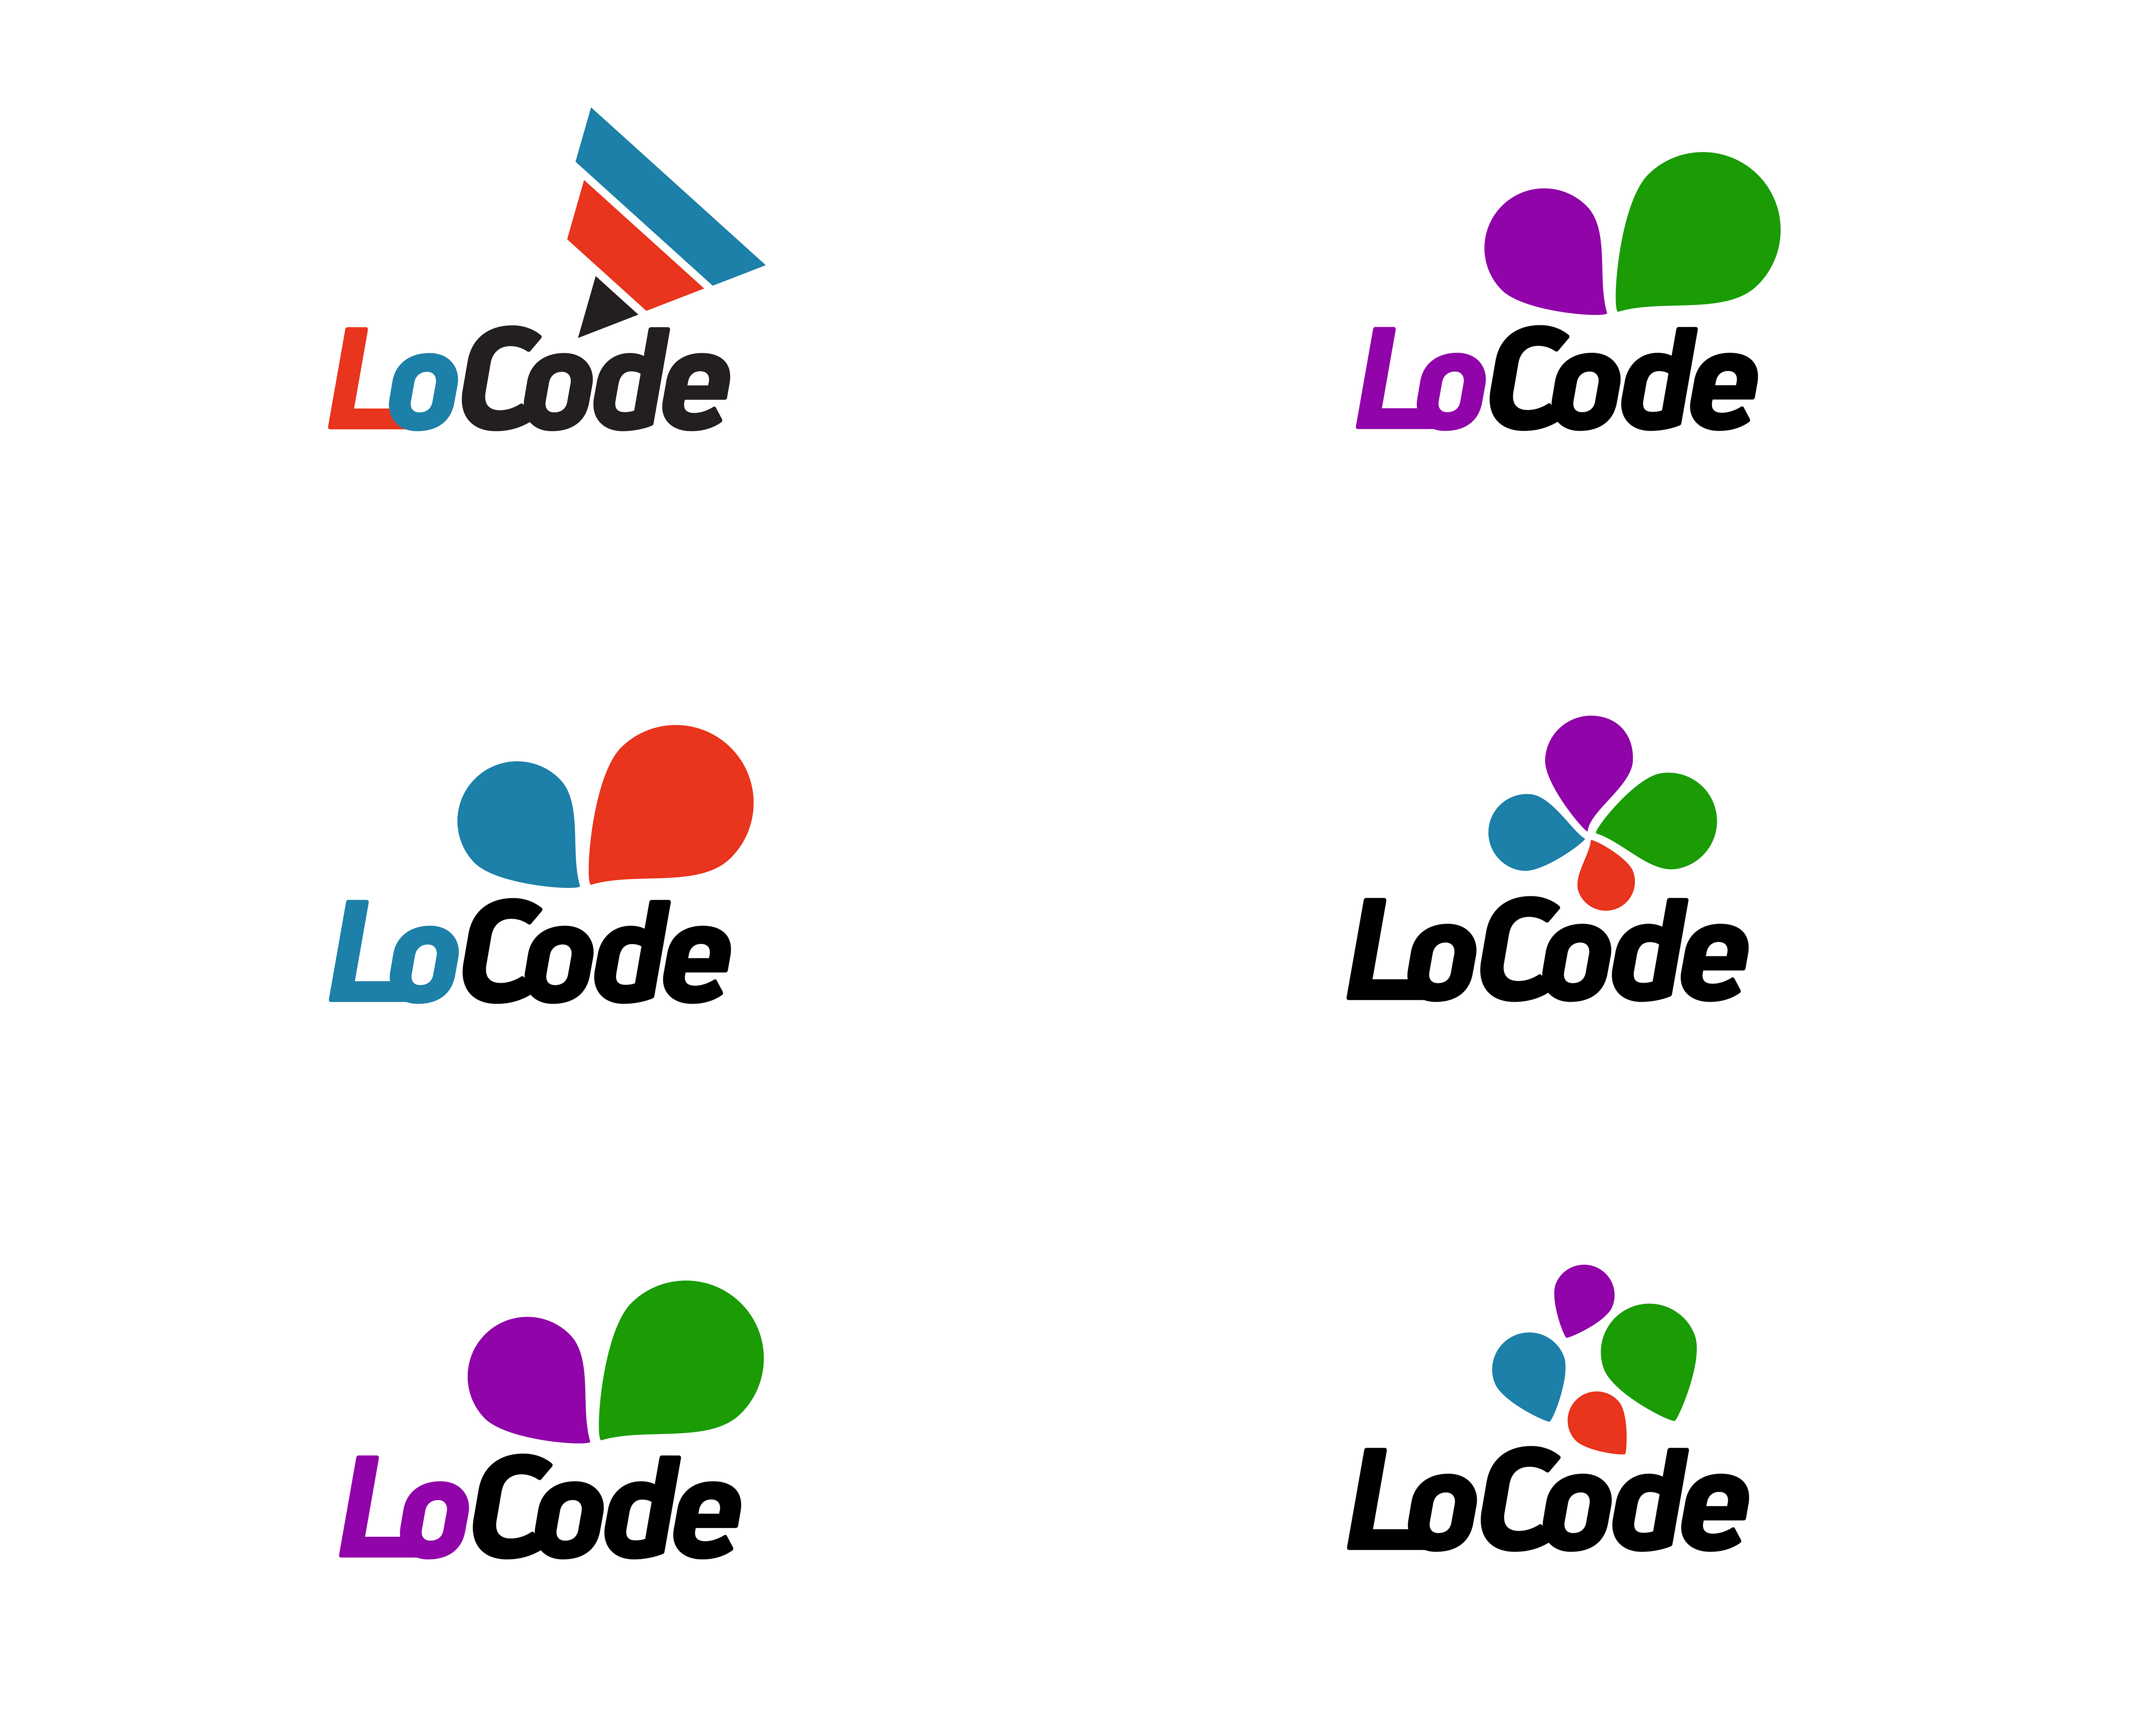 LoCode logos